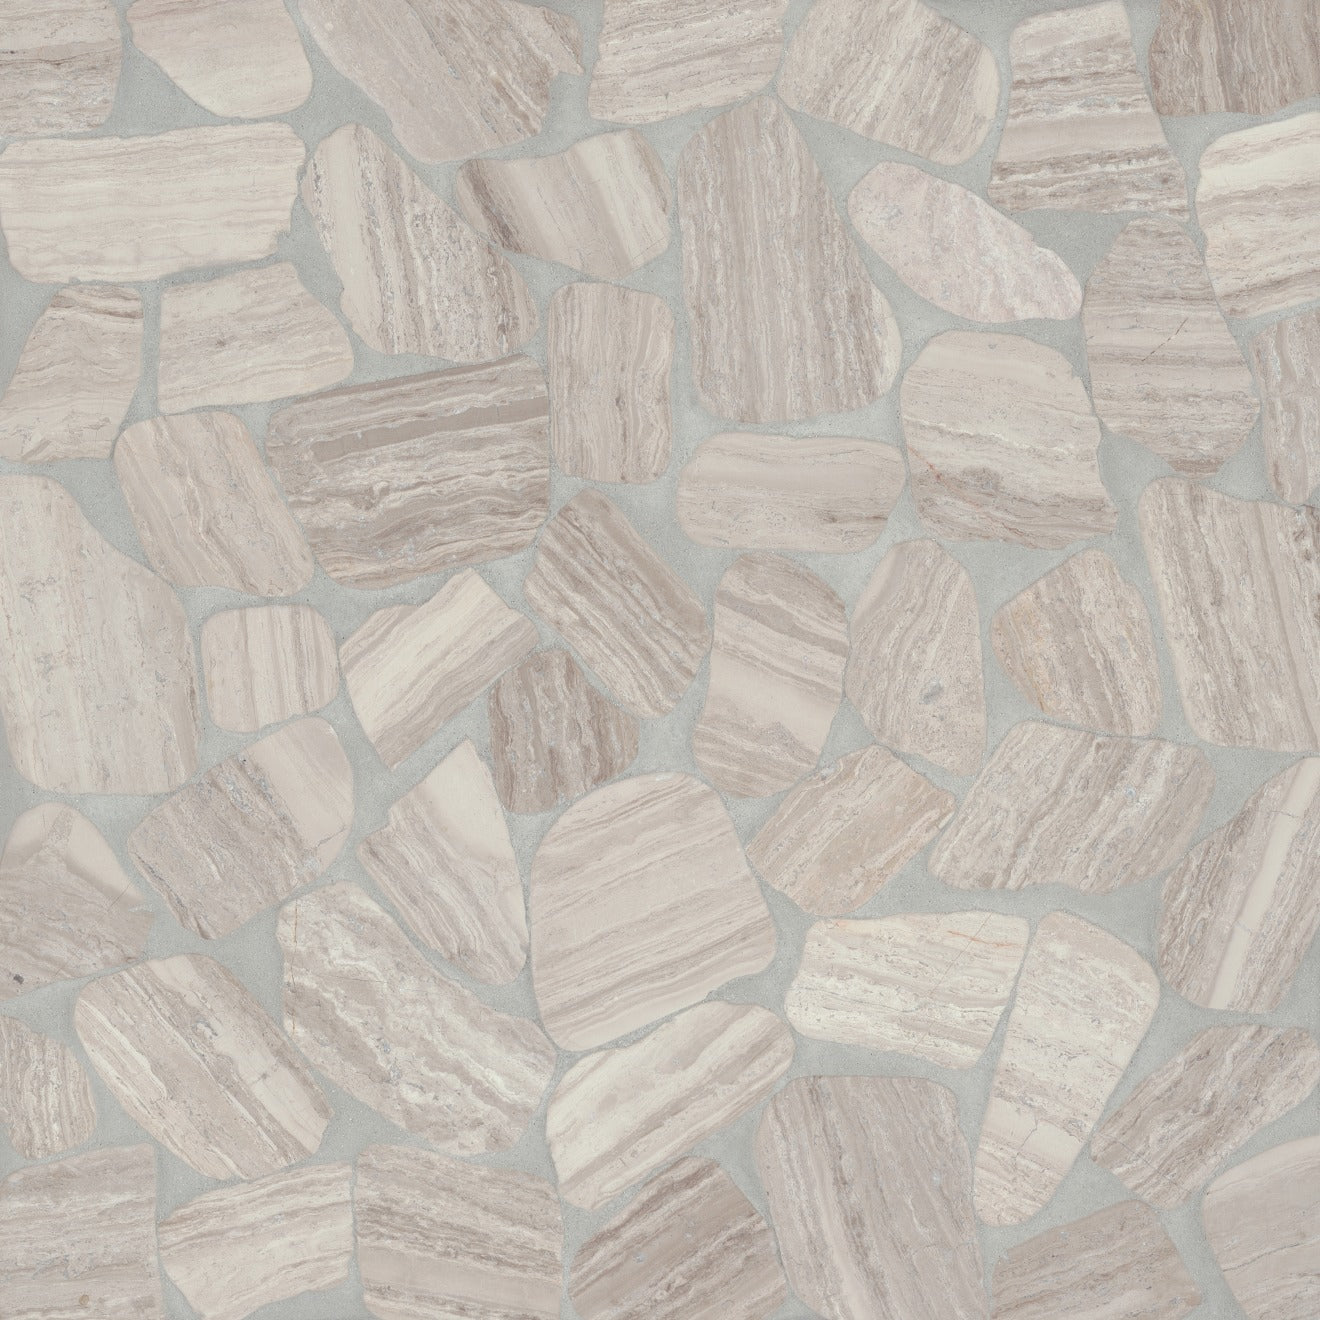 Waterbrook Sliced Pebble Stone Mosaic 12X12 Ashen Grey